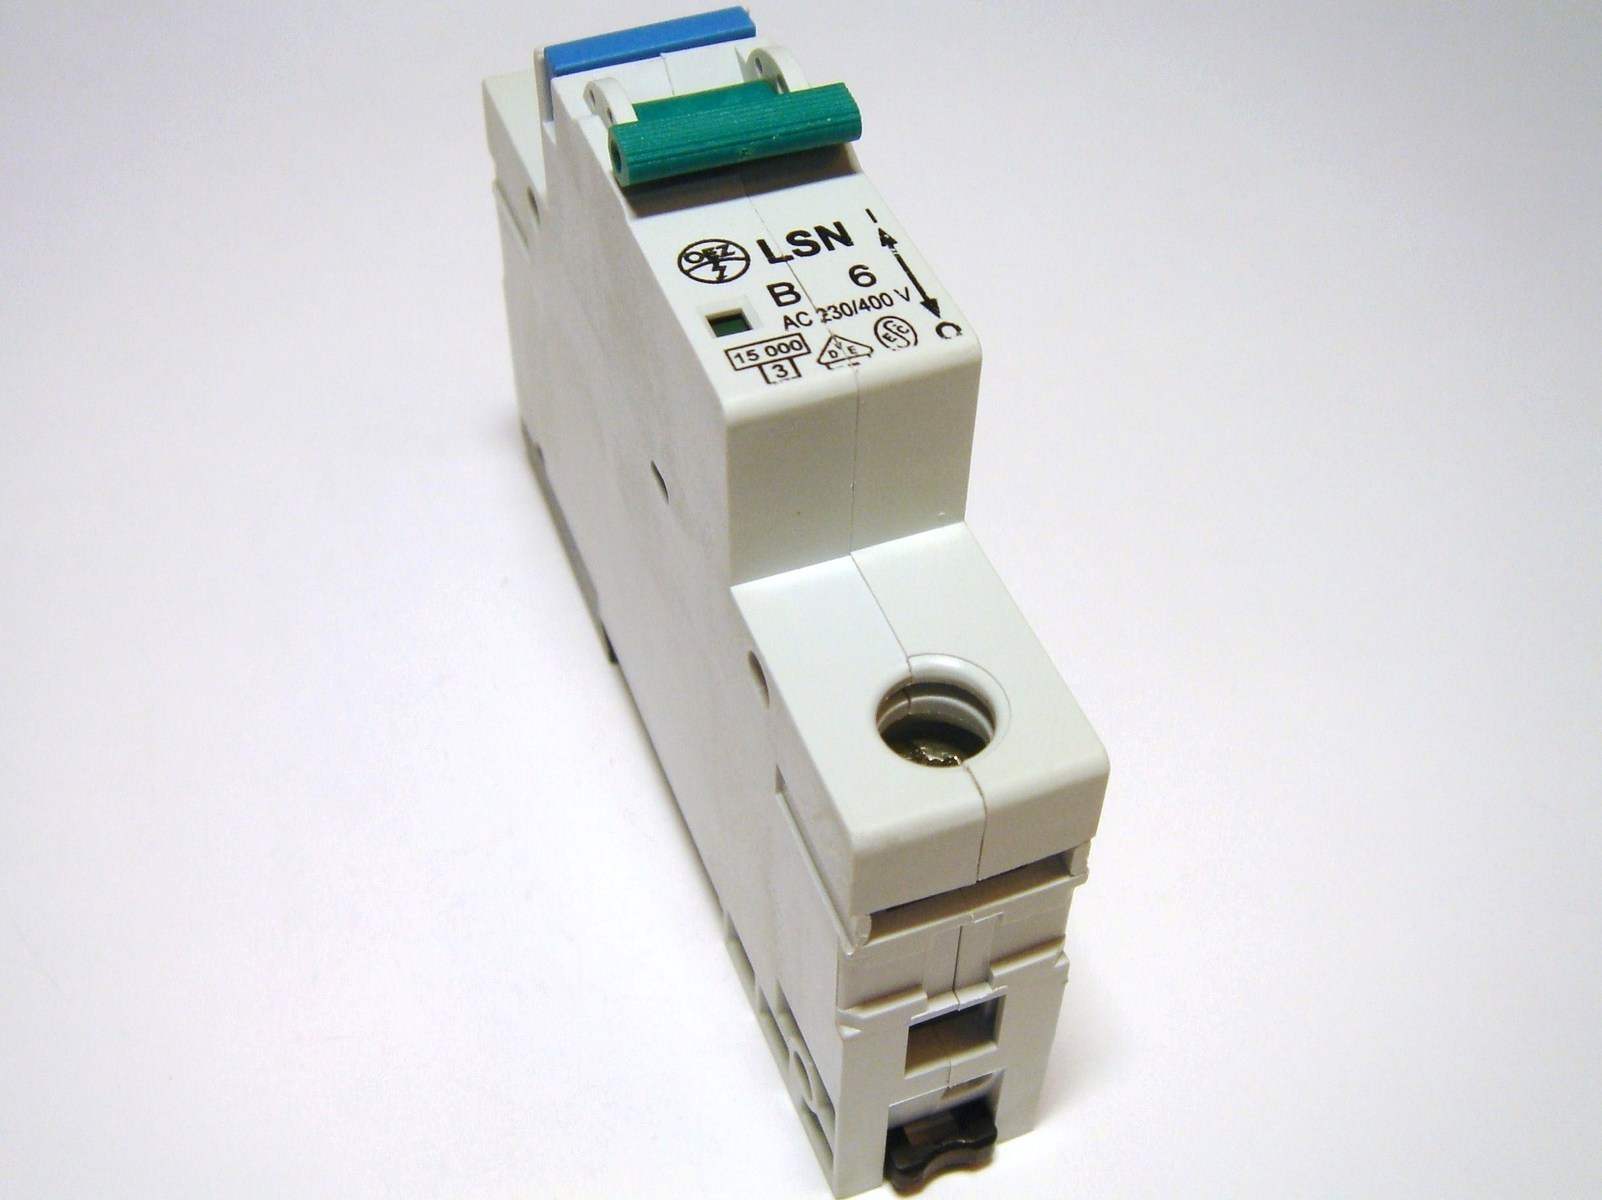 Автоматический выключатель LSN 6c/2. Выключатель автоматический Oez LSN c1 1a однофазный. Выключатель автоматический g101c06. Автомат двухполюсный 4а d LSN Oez.